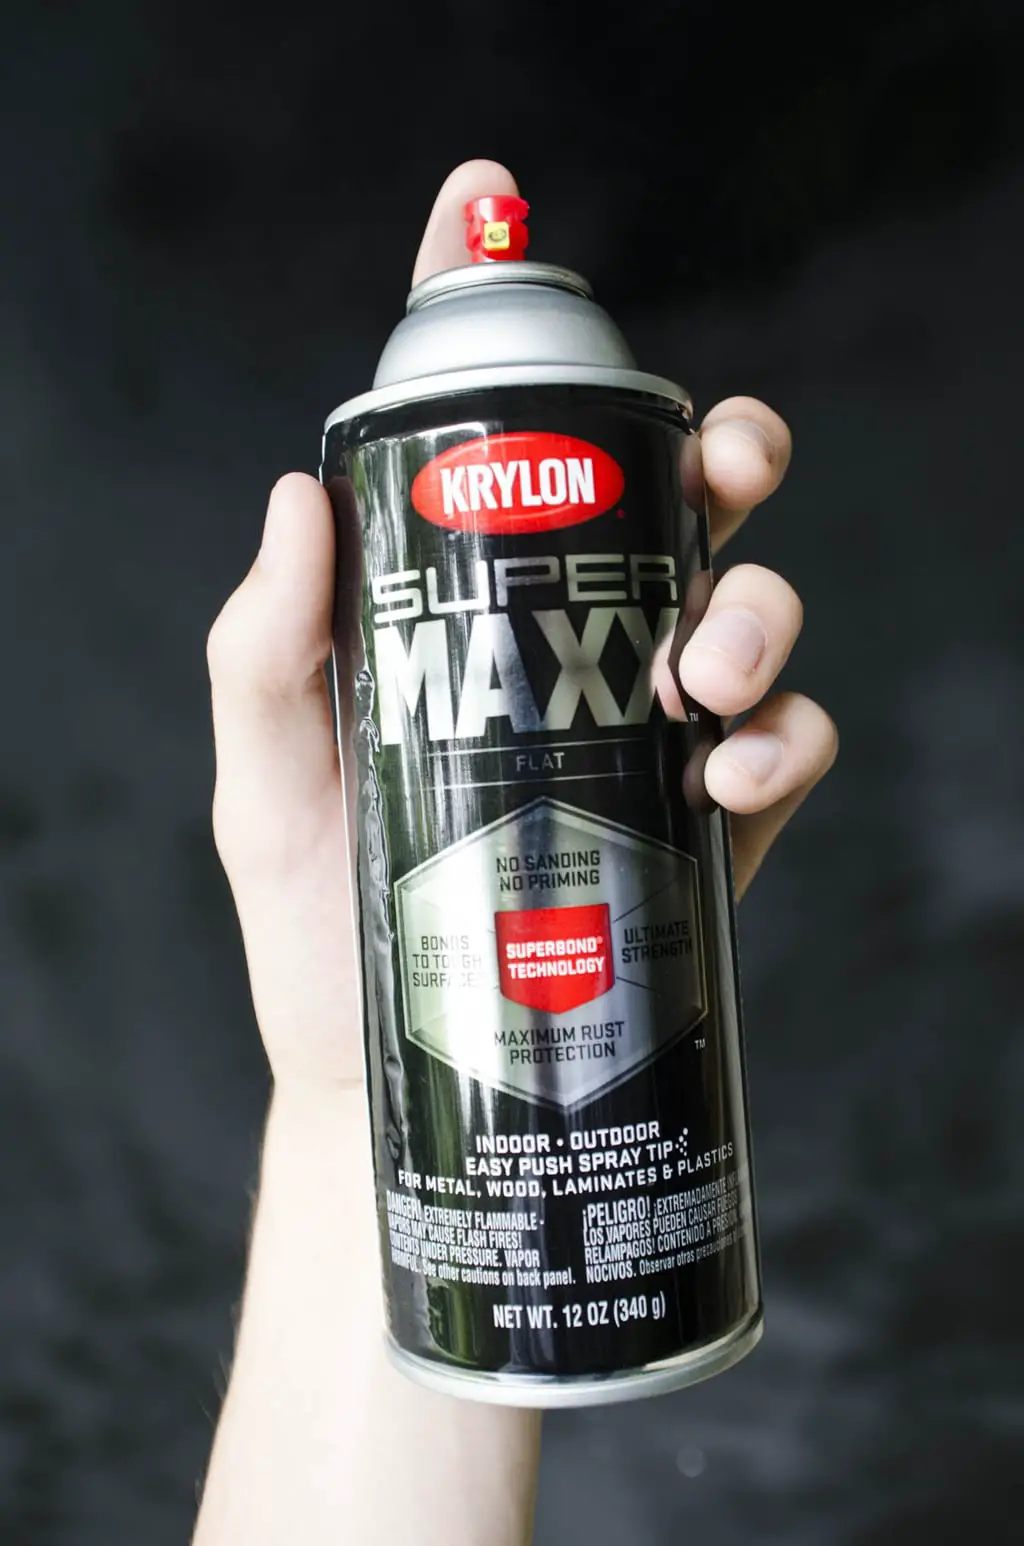 Krylon Super Maxx All-in-One spray paint via @thouswellblog